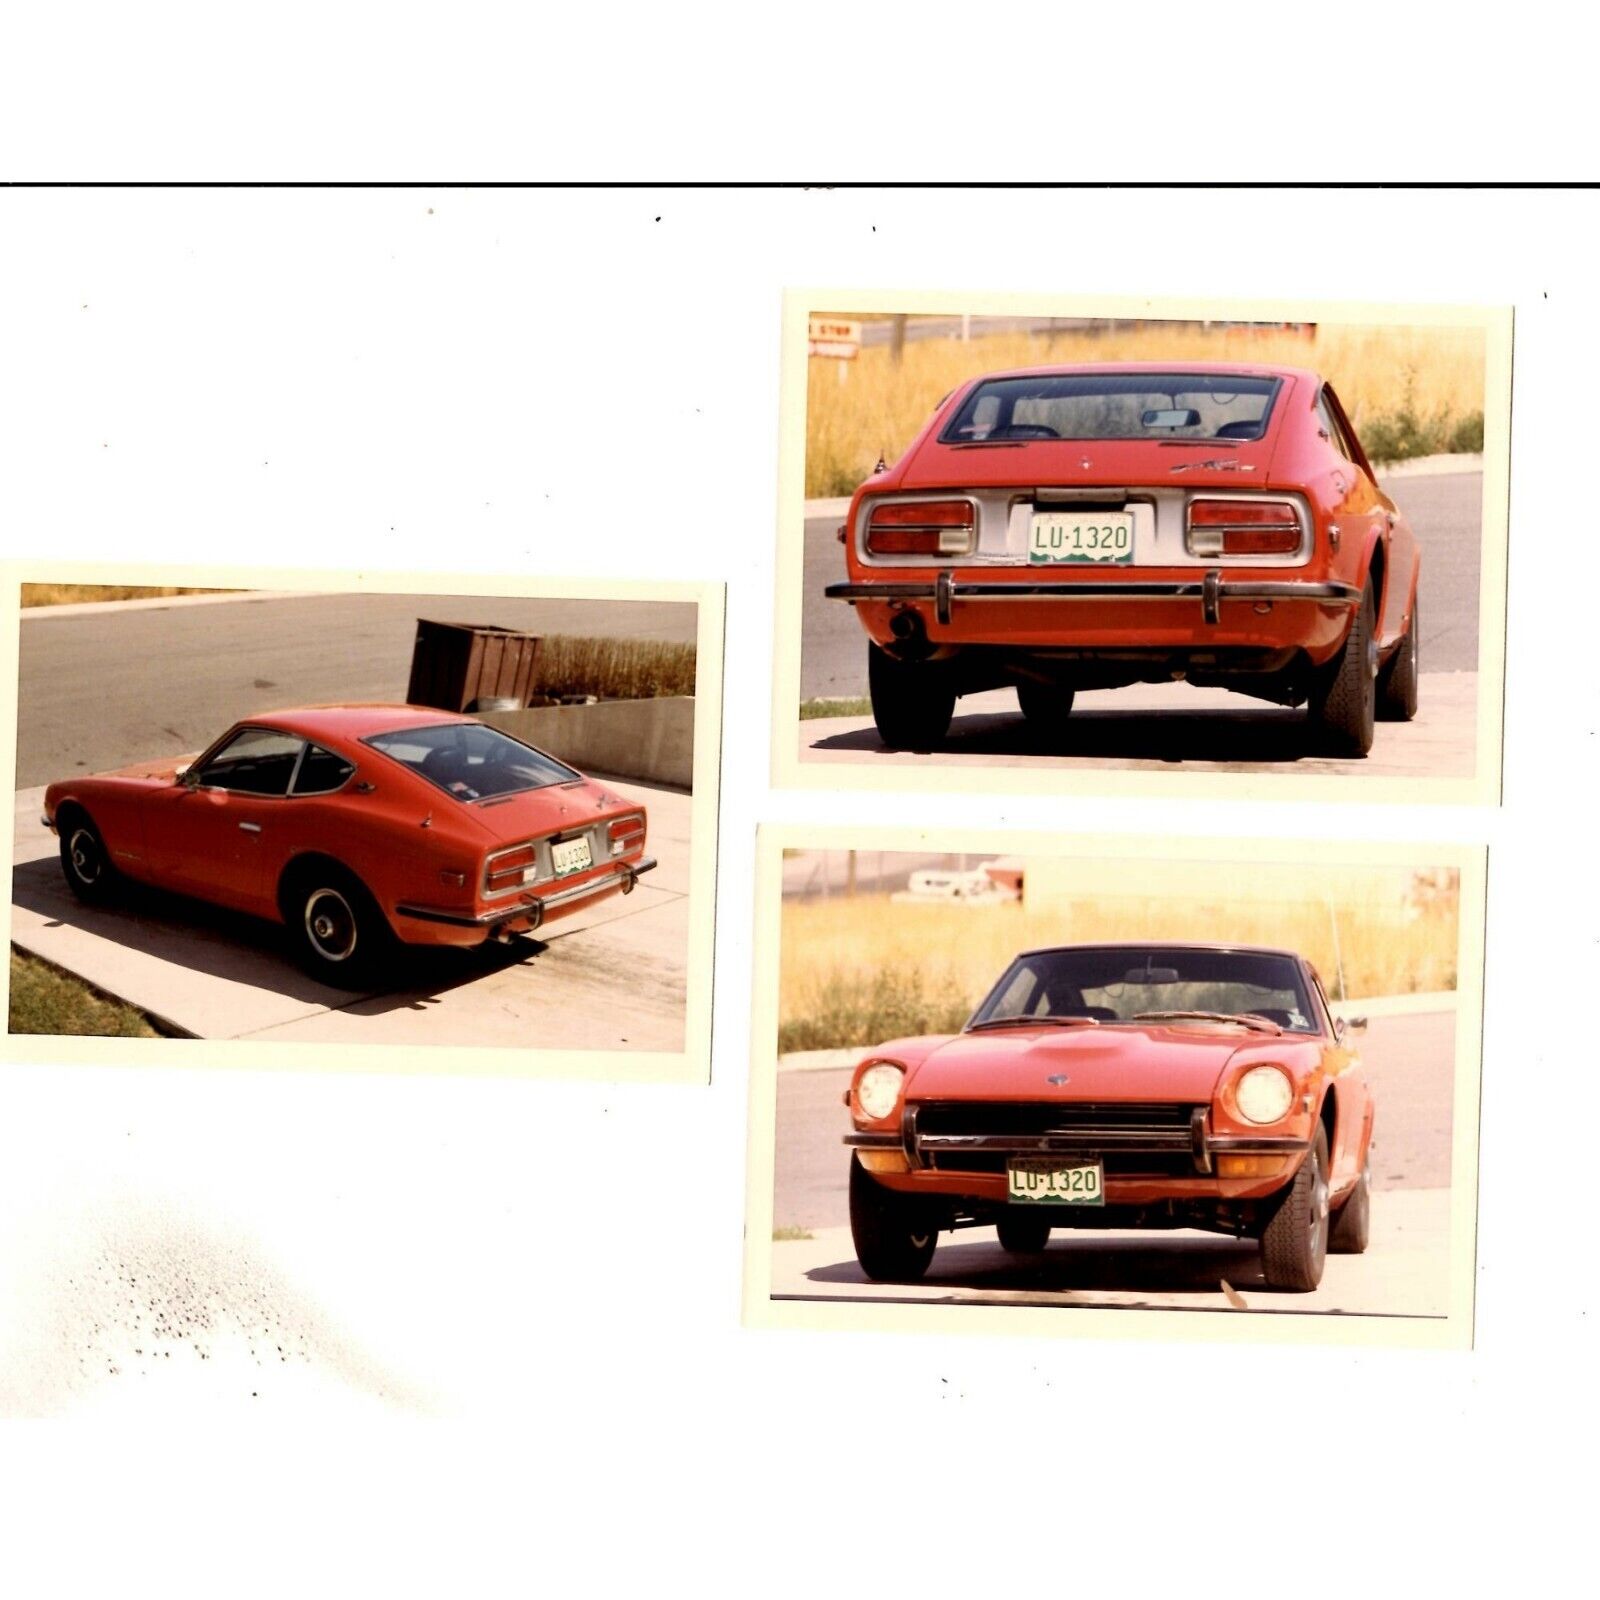 1971 Datsun 240Z Red Set of 3 Photographs Snap Shots Colorado Vintage Car Auto